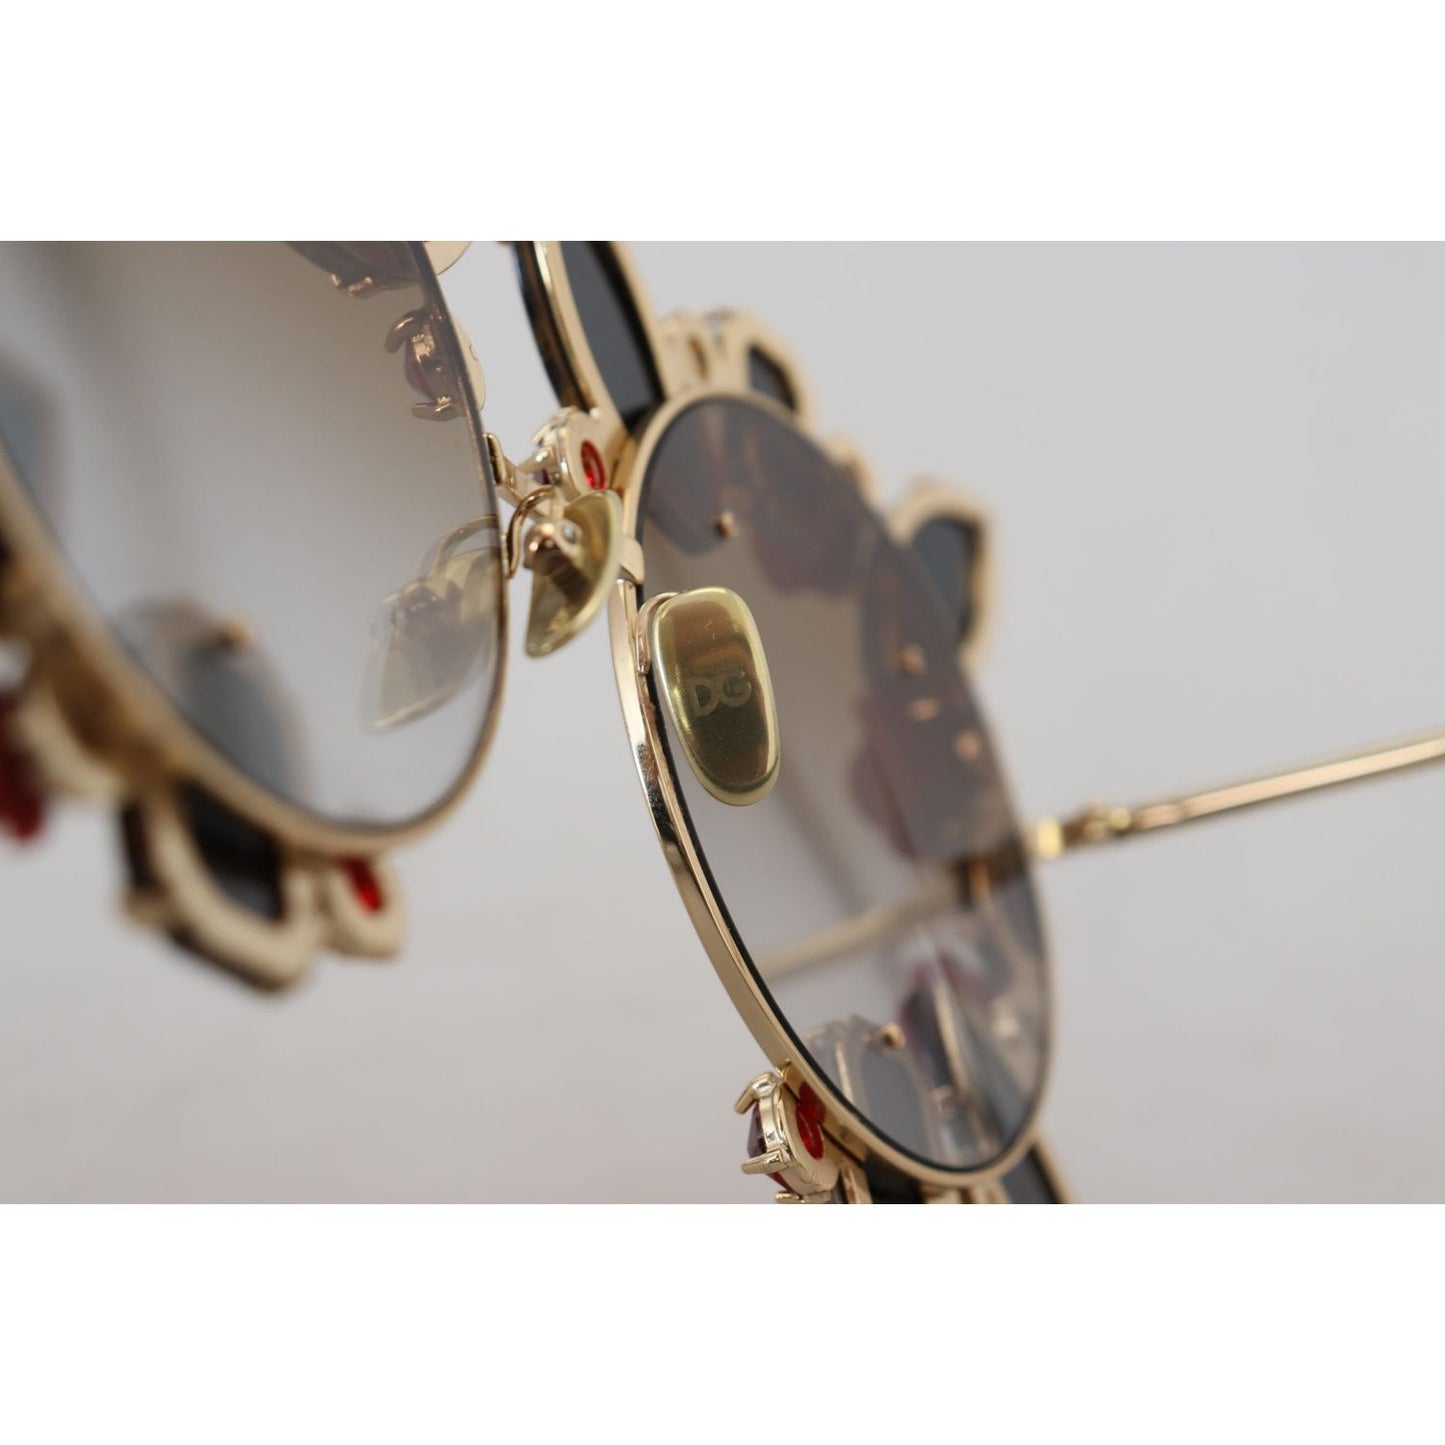 Dolce & Gabbana Elegant Round Rose-Embellished Sunglasses gold-metal-frame-roses-embellished-dg2207b-sunglasses IMG_1481-1-scaled-54840cbf-8e8.jpg